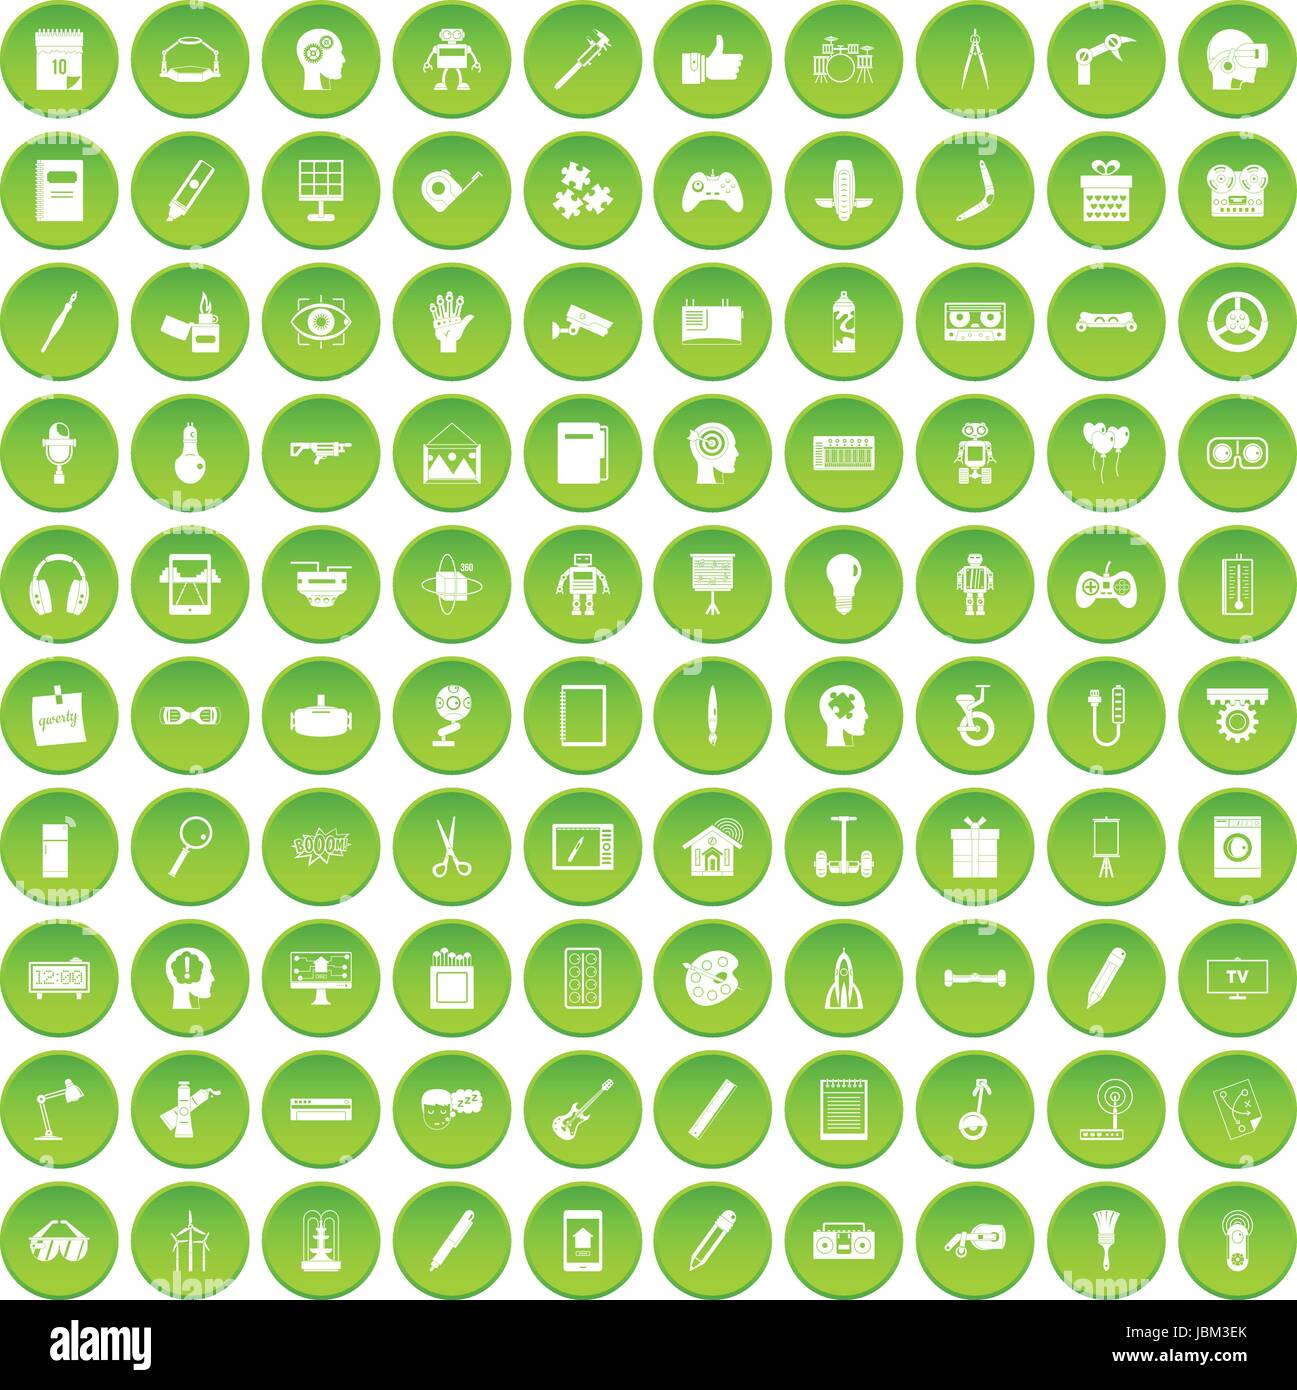 100 kreative Idee Icons set grünen Kreis Stock Vektor